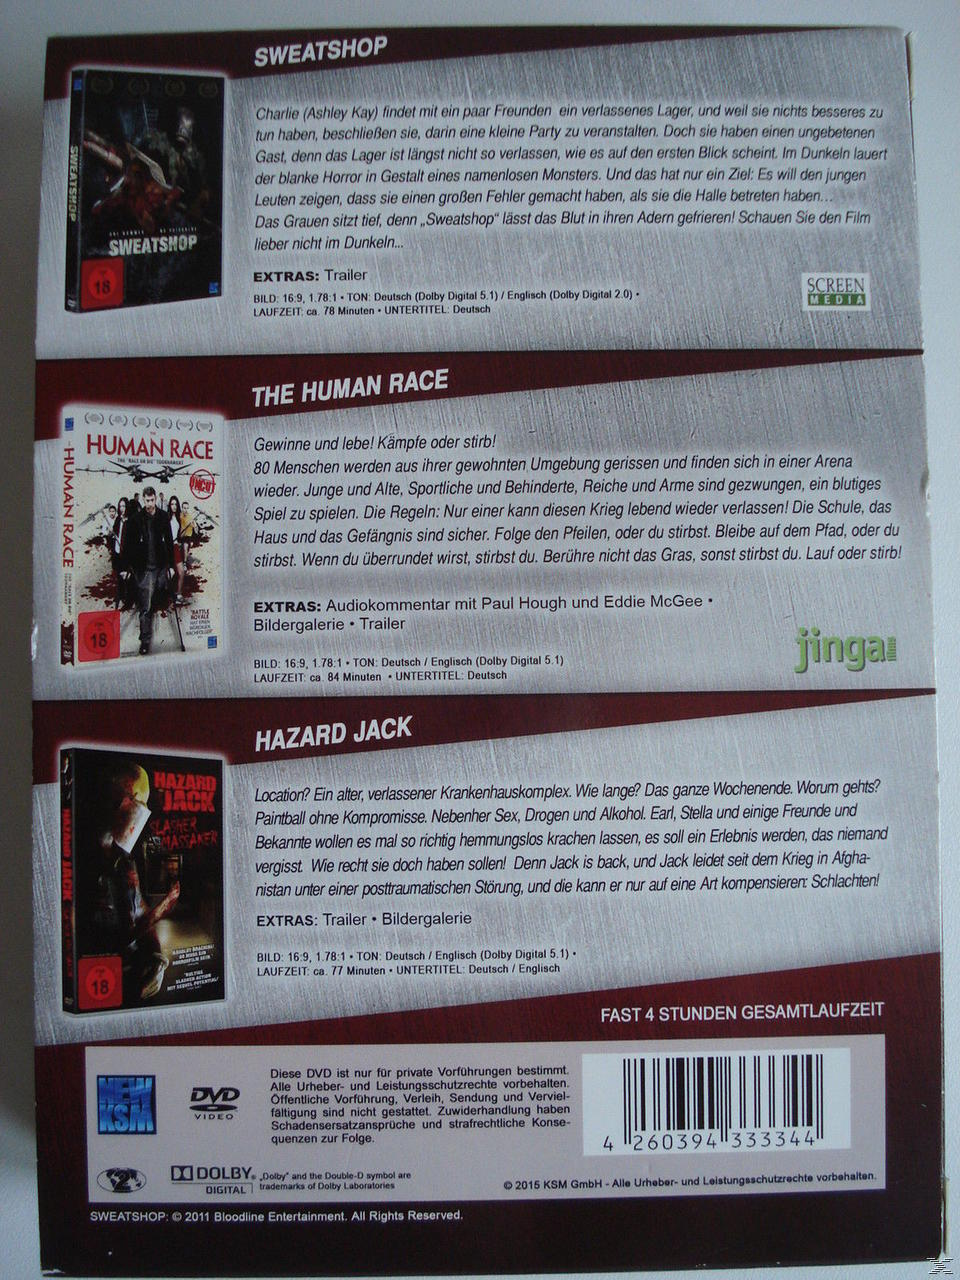 Horror Movie Night 2 DVD